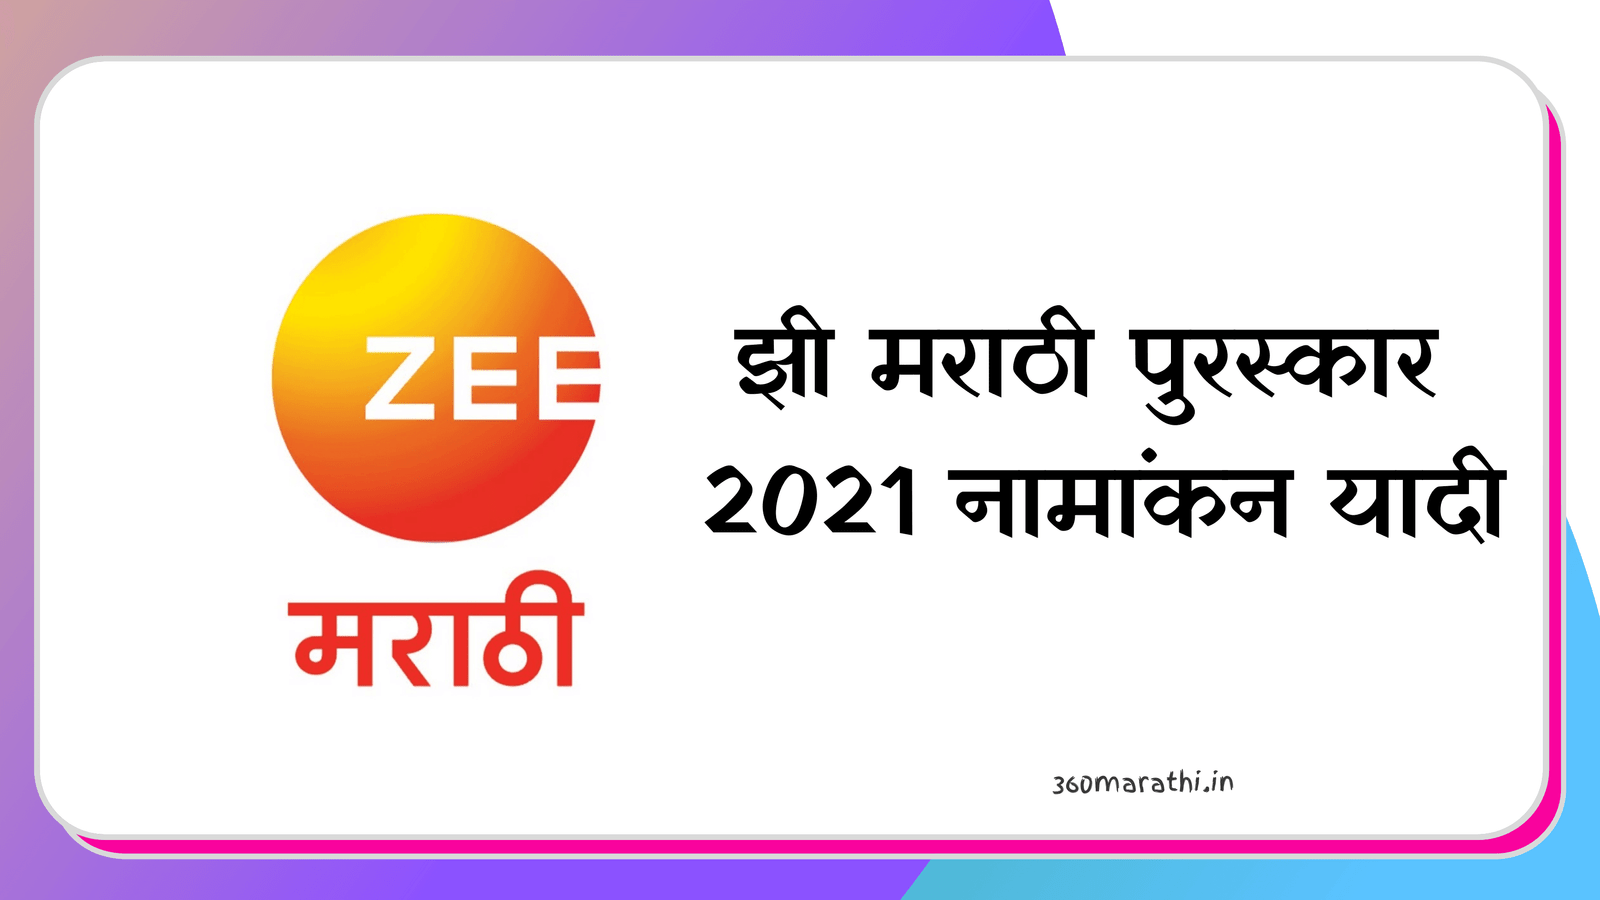 झी मराठी पुरस्कार 2021 नामांकन यादी जाहीर | Zee Marathi Award 2021 Nomination List Announced